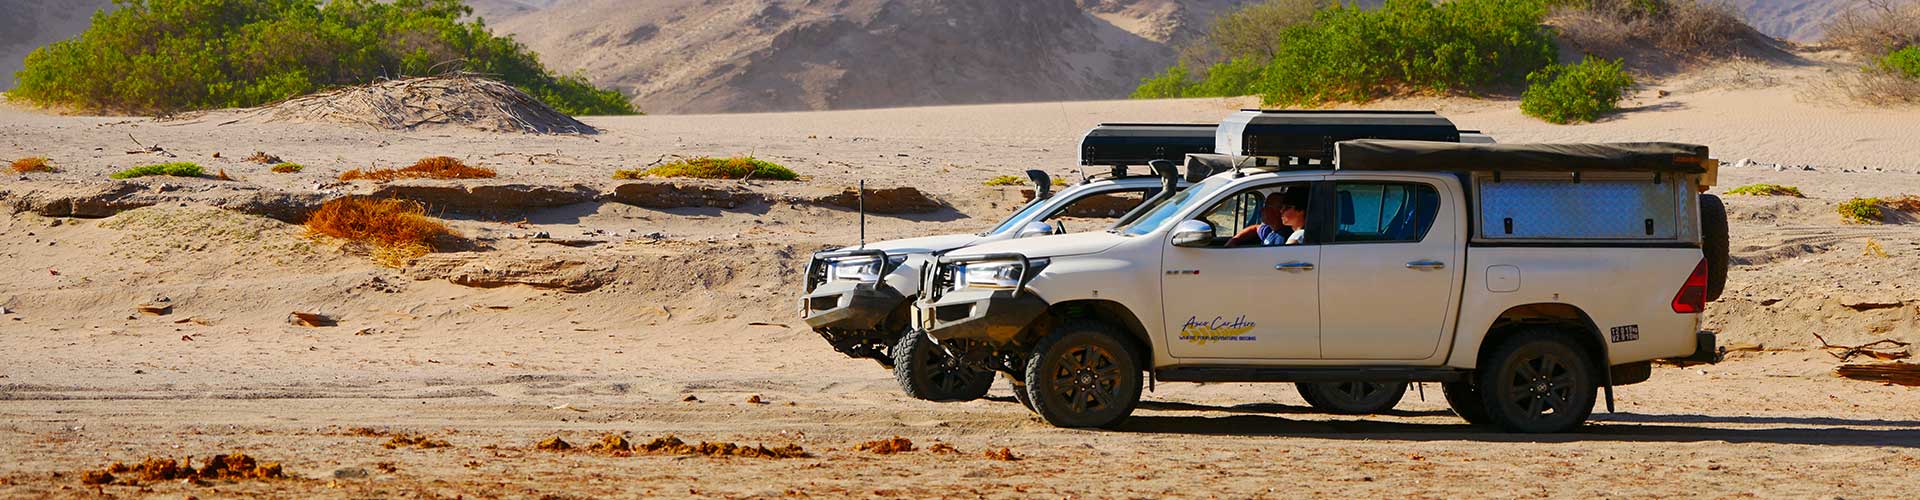 Tarieven-Autohuur-Namibië-Asco-Car-Hire